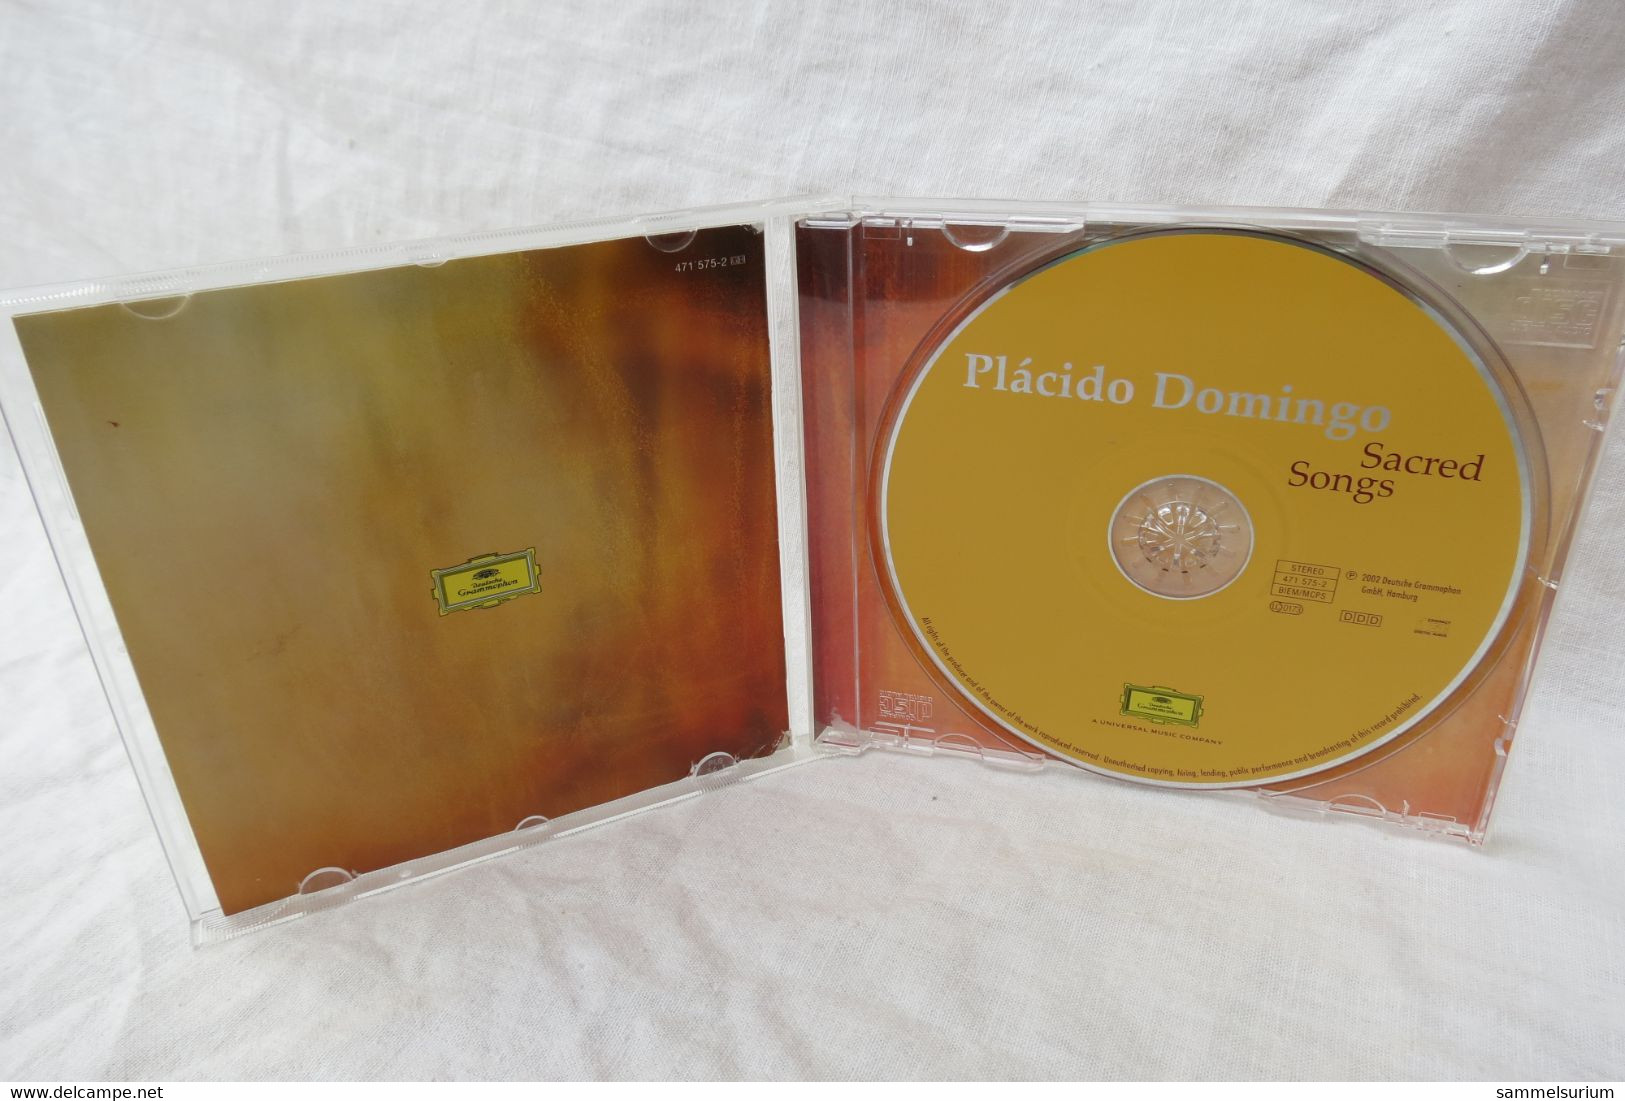 CD "Plácido Domingo" Sacred Songs, Deutsche Grammophon - Oper & Operette